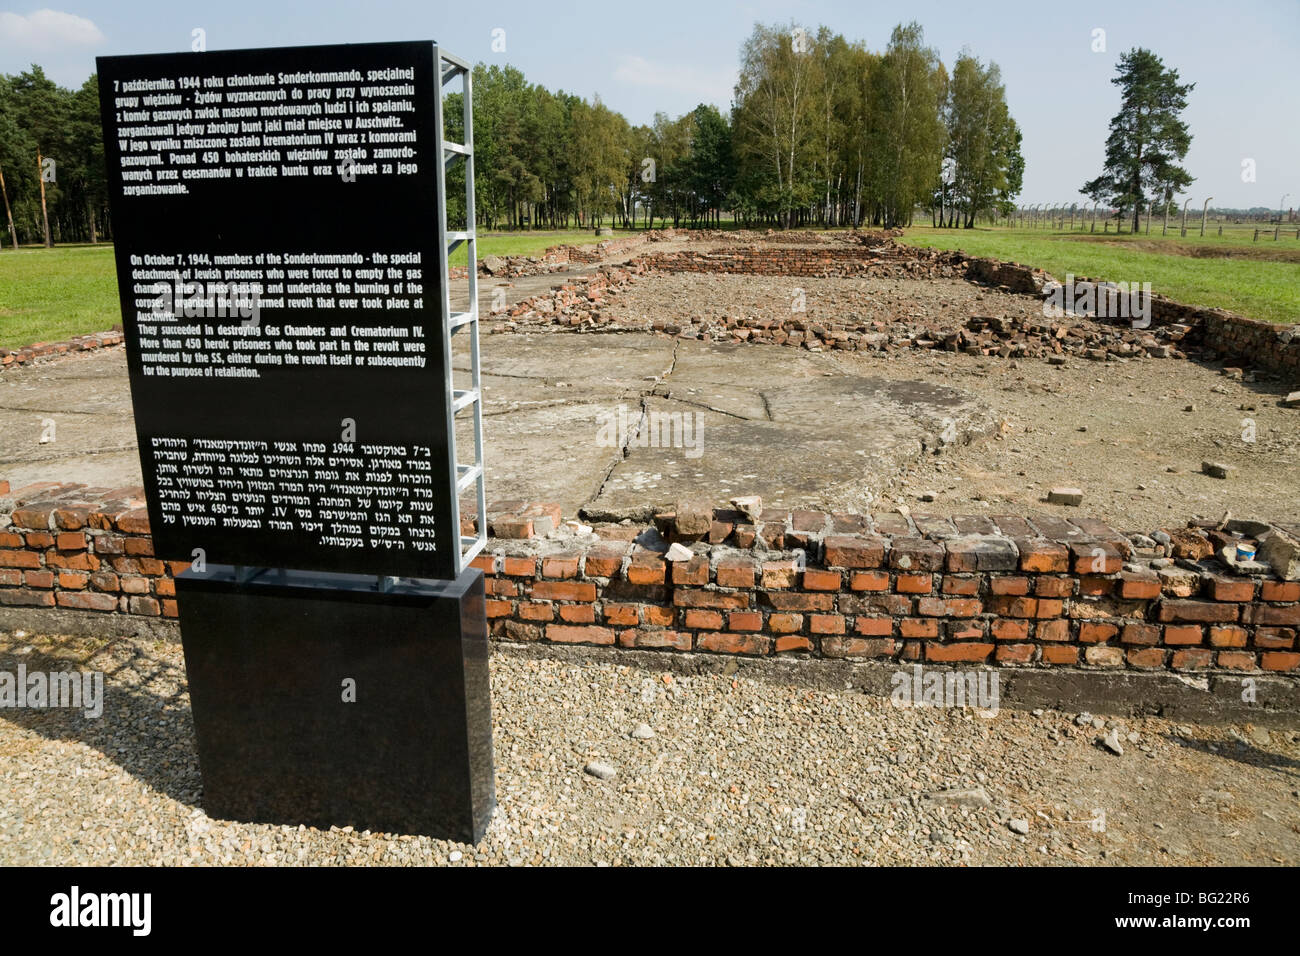 Information notice / sign / memorial near gas chambers / crematoria IV. Auschwitz II - Birkenau Nazi concentration camp, Poland Stock Photo